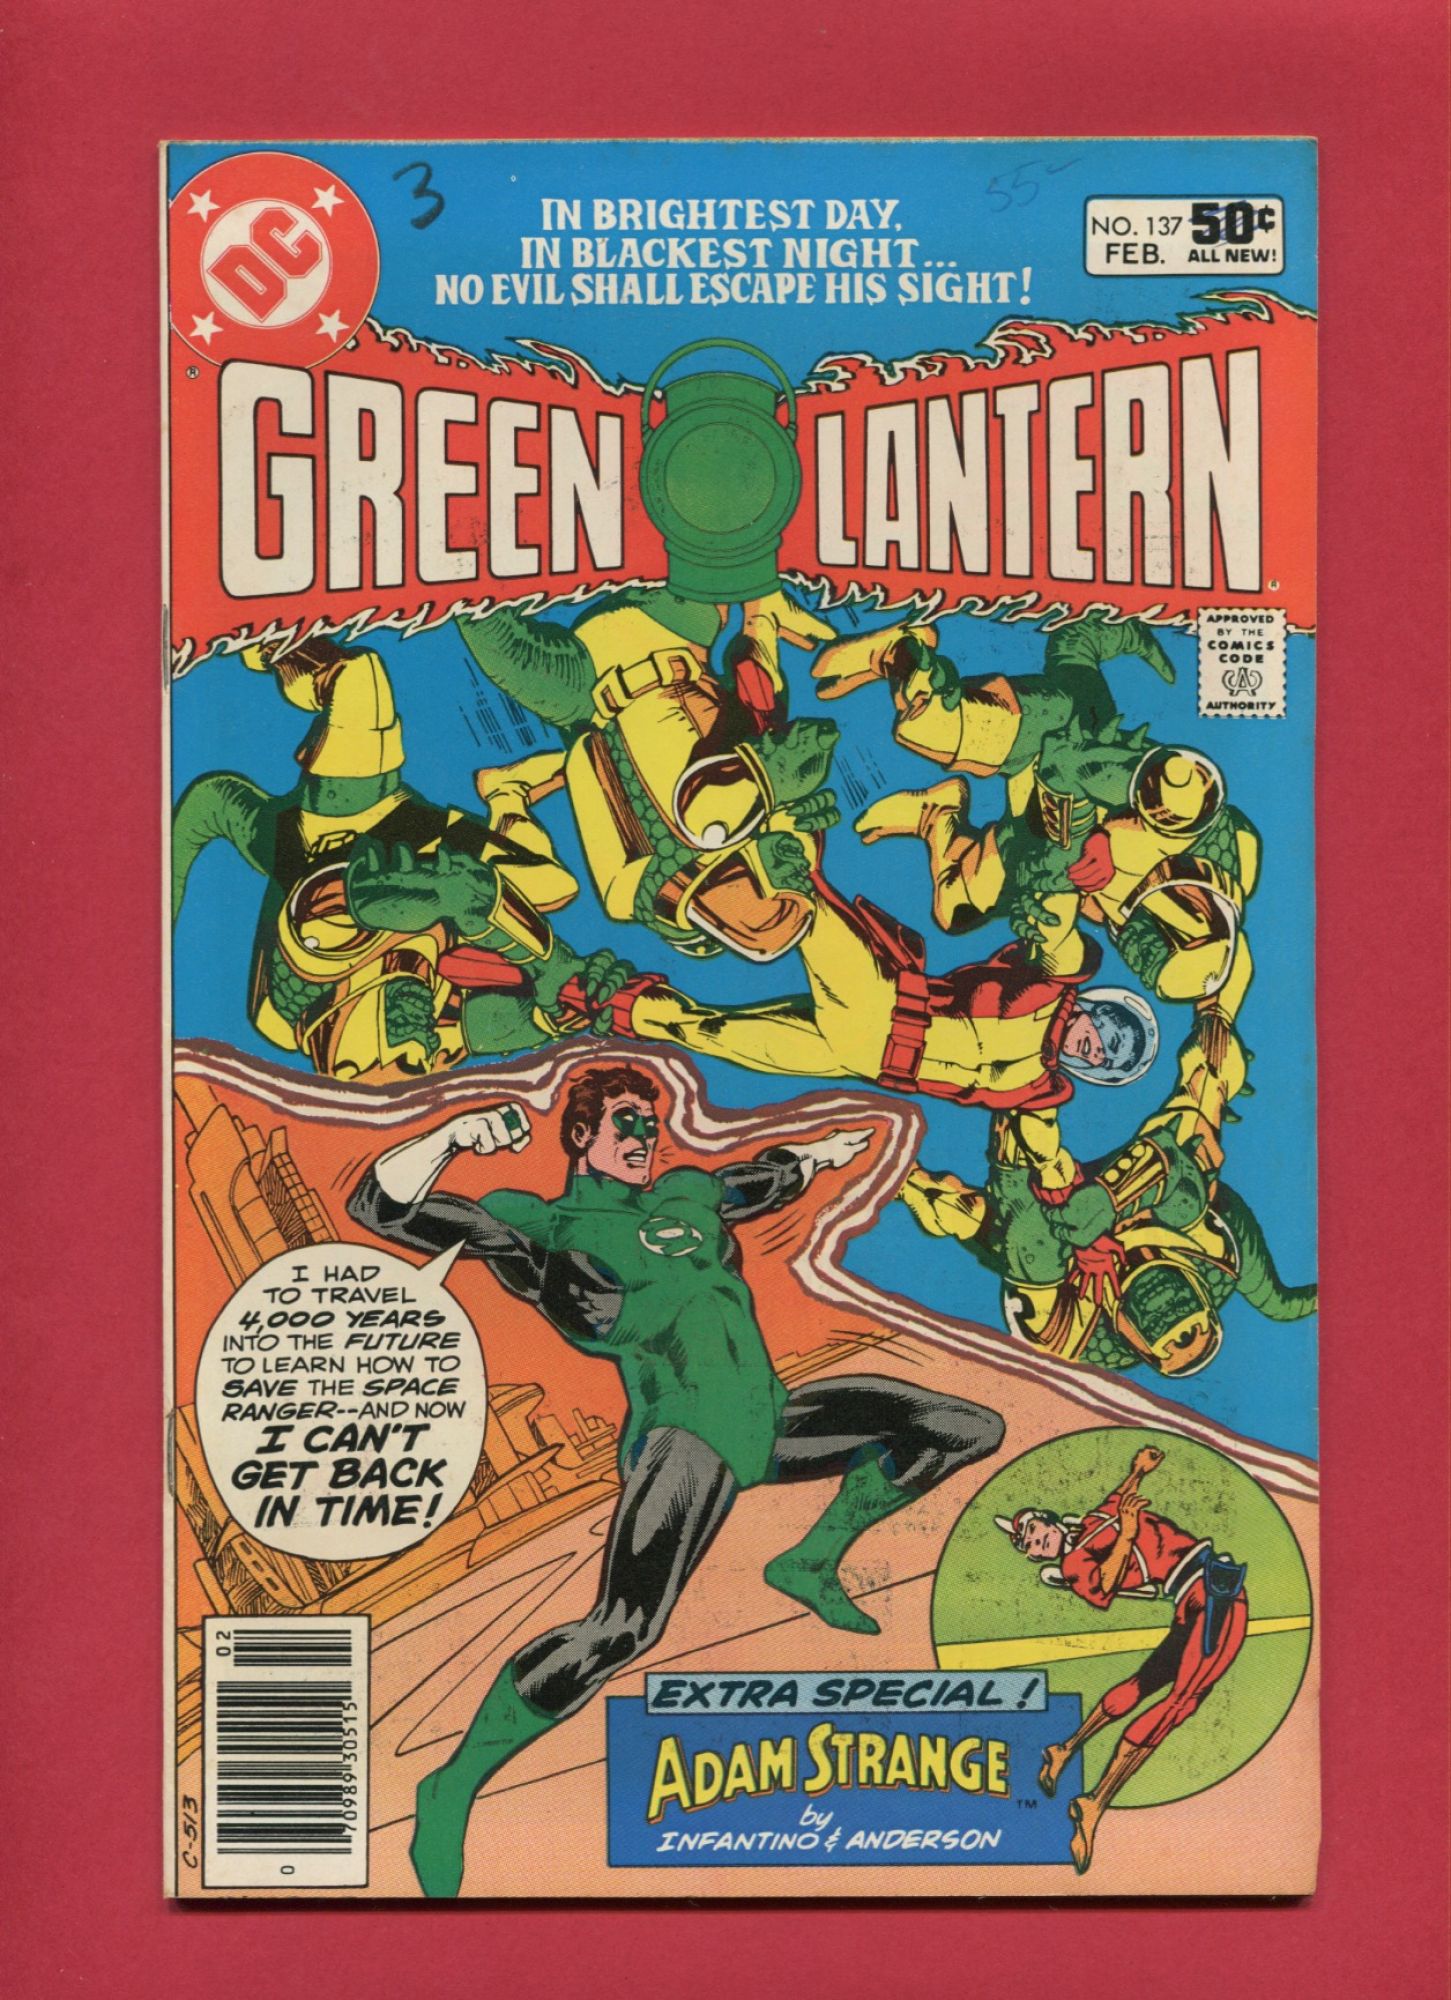 Green Lantern, #137, Feb 1981, 6.0 FN